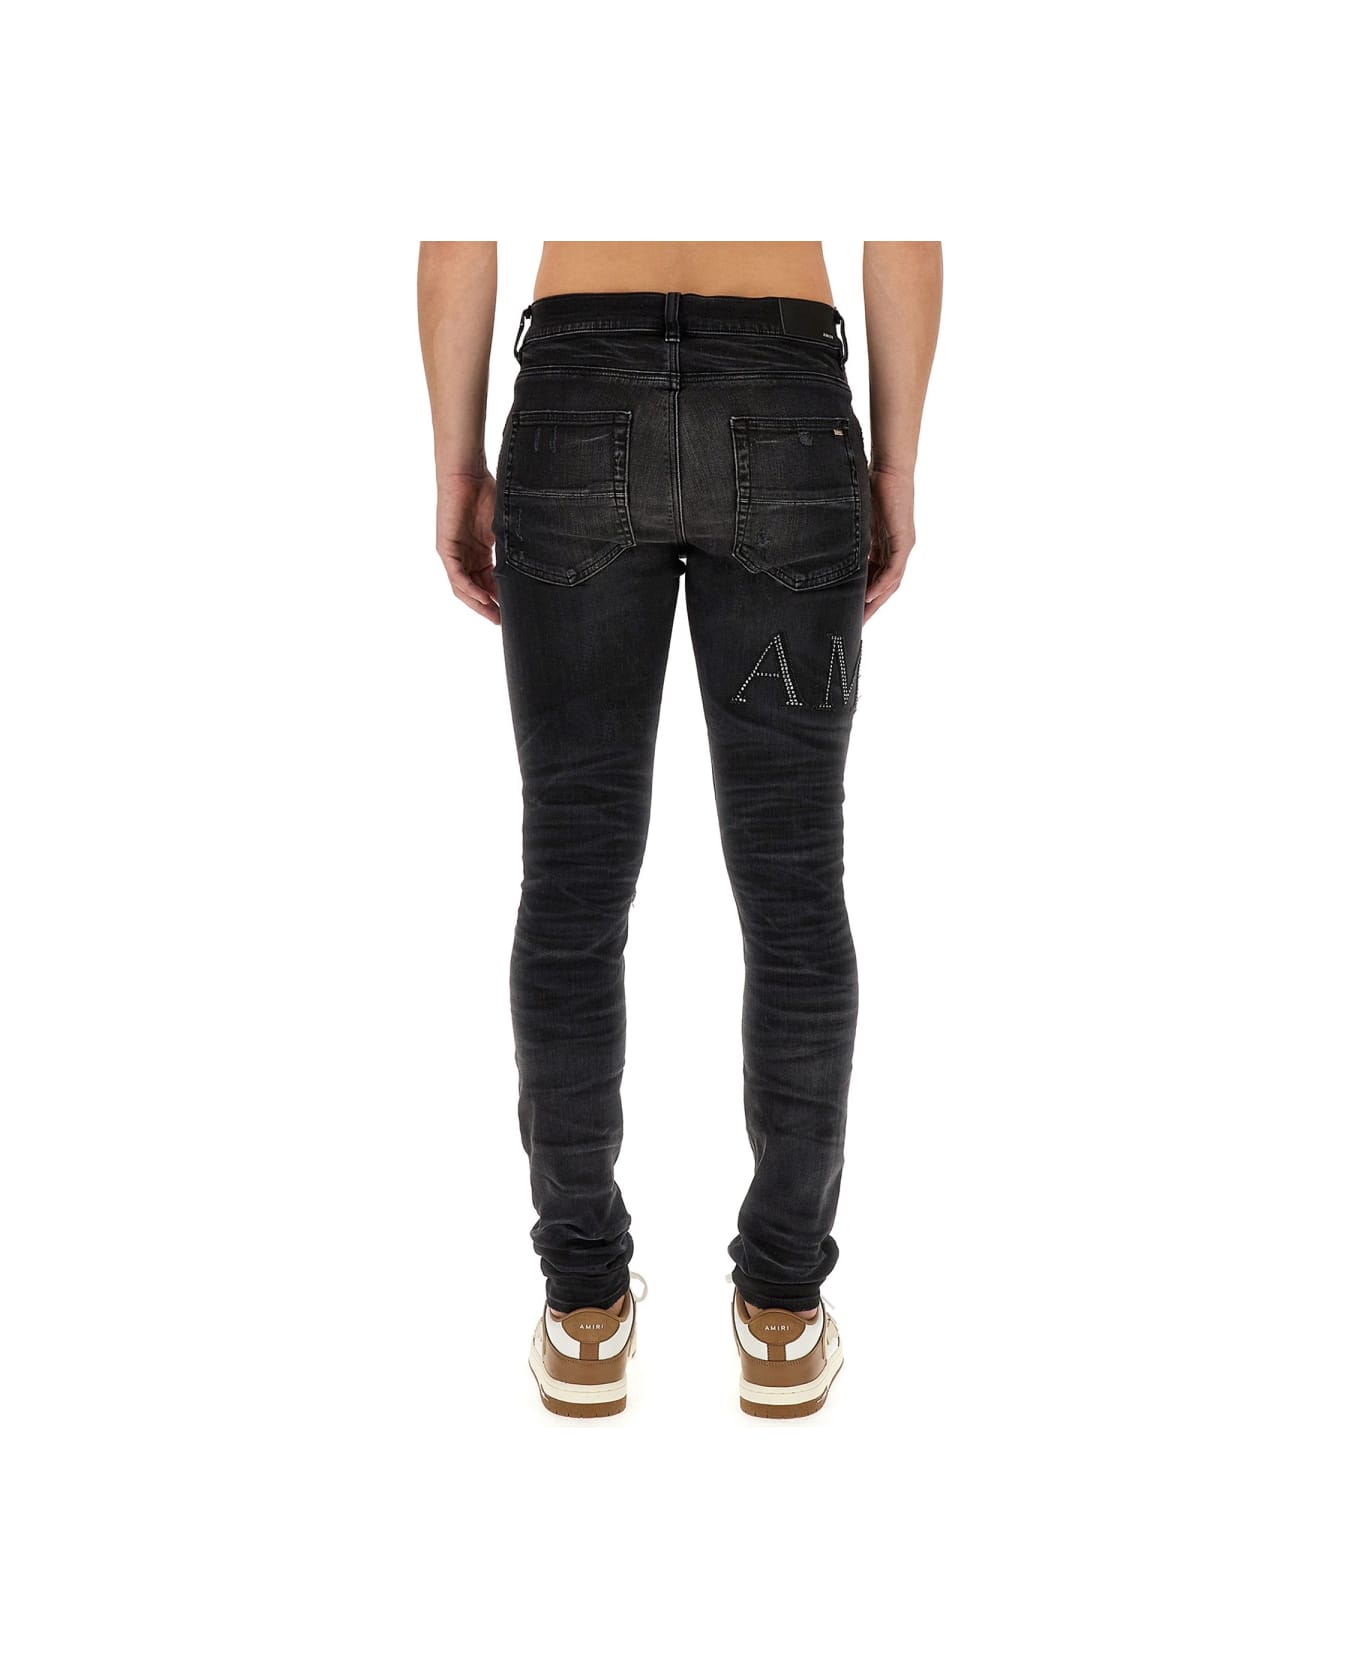 AMIRI Slim Fit Jeans - BLACK